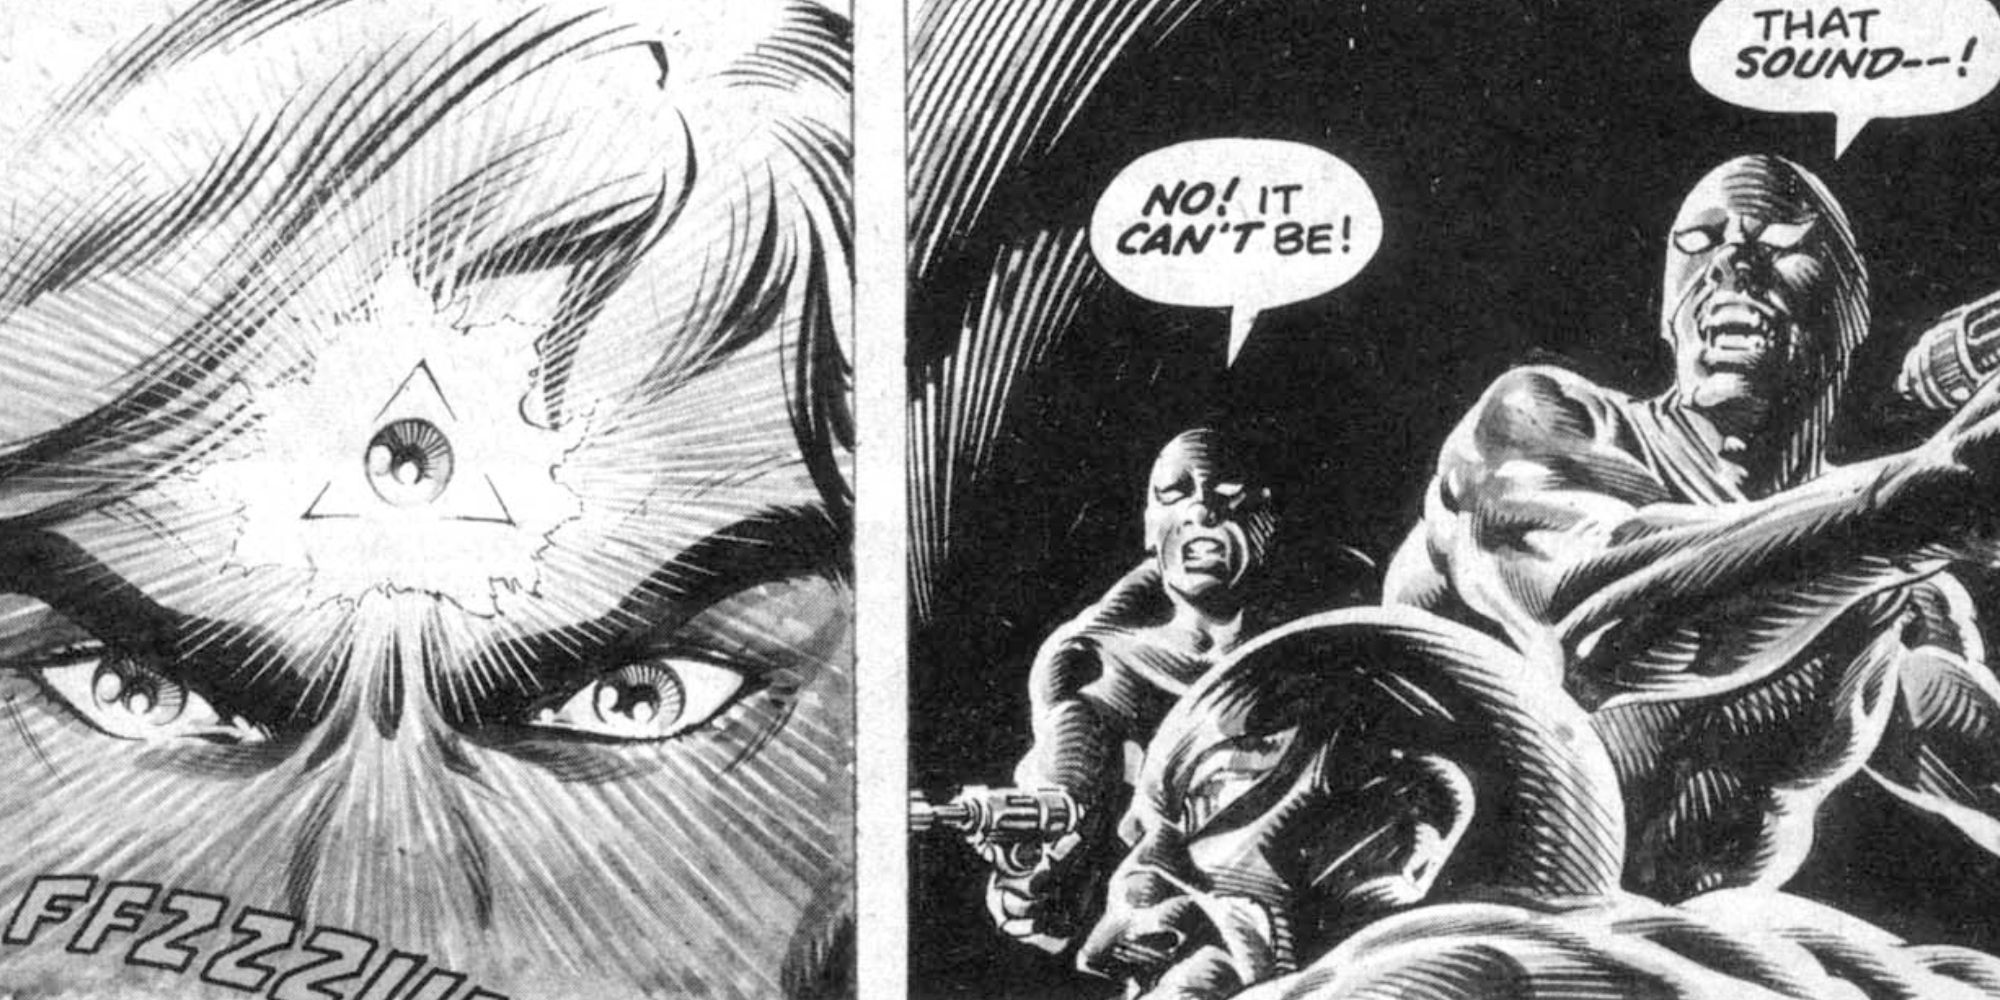 Bloodstone uses his third eye power in Marvel Comics.